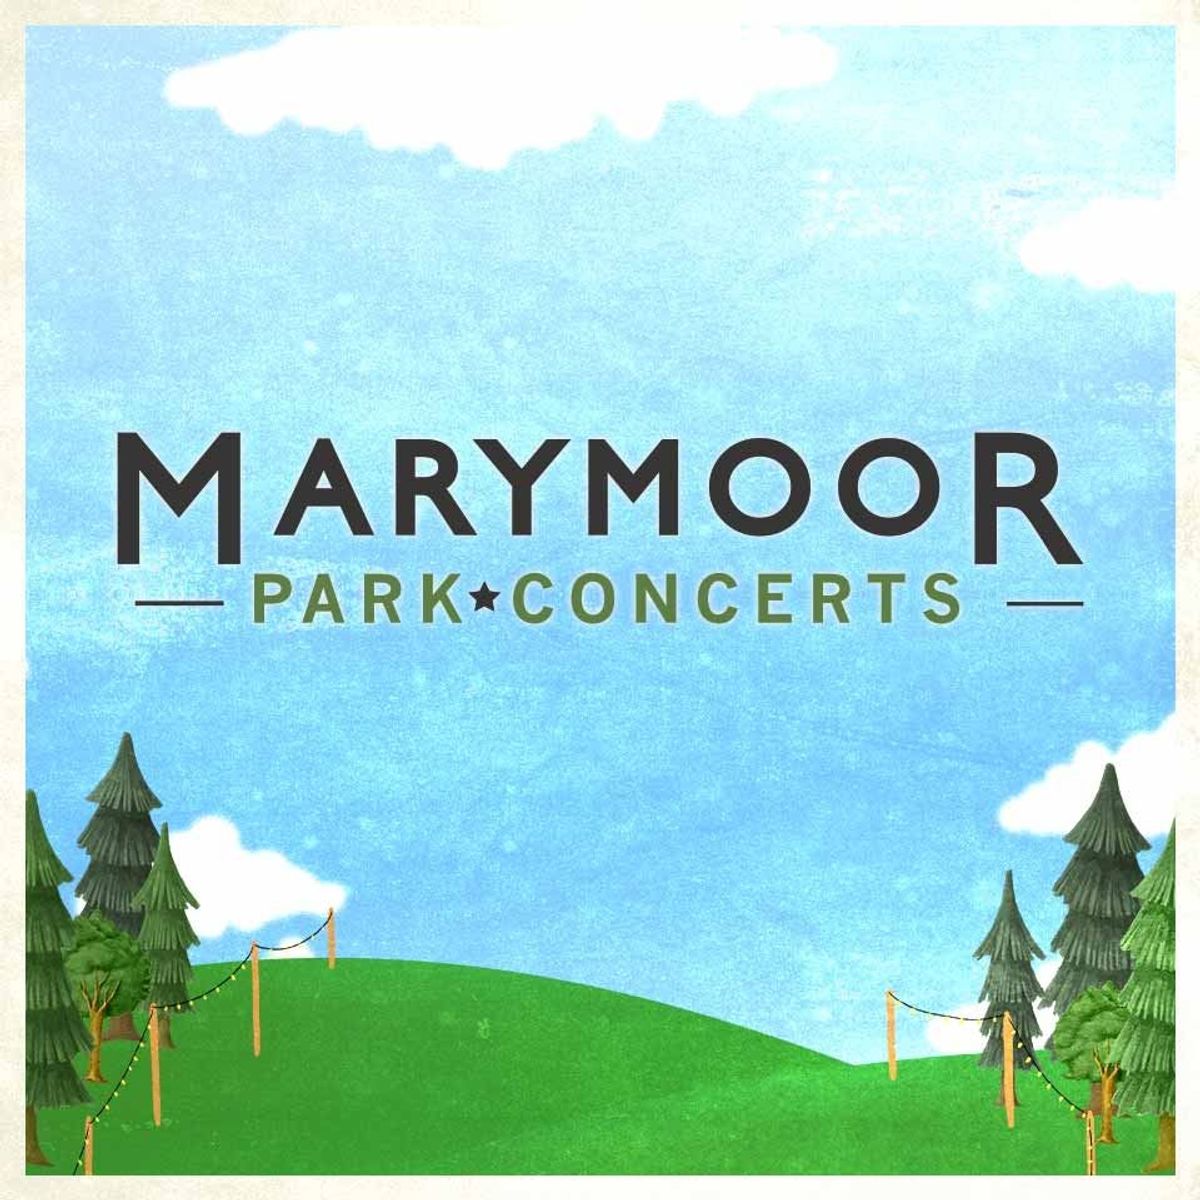 Marymoor Park Concerts 2022 at Marymoor Park in Redmond, WA - Multiple